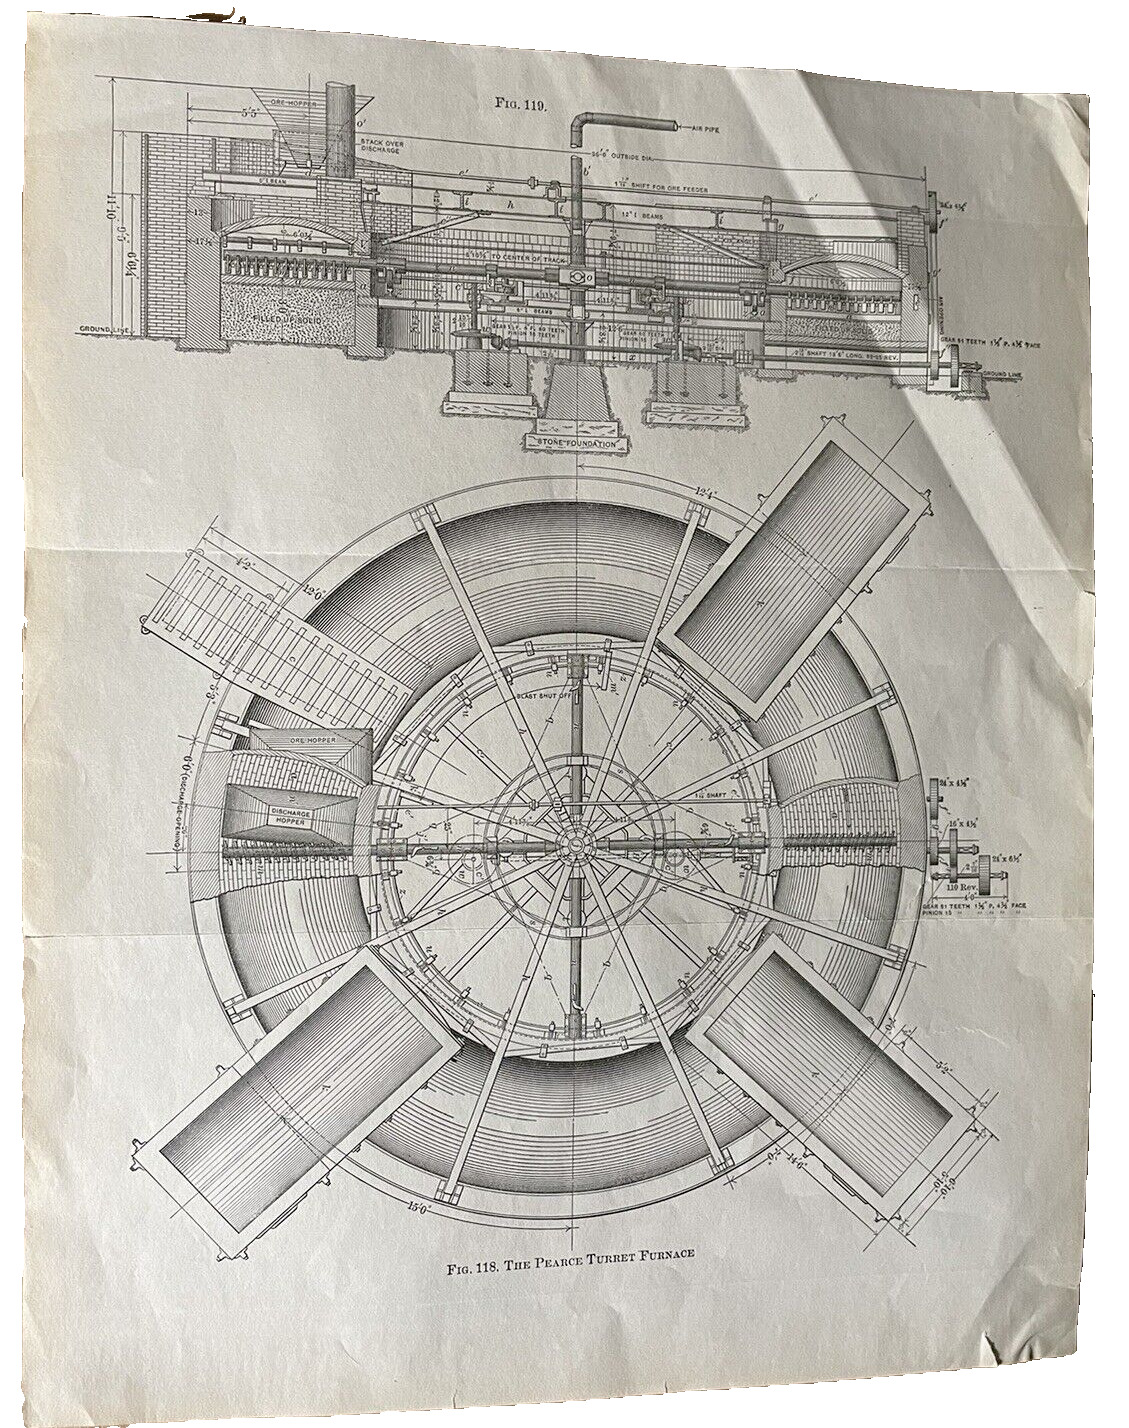 Pearce Turret Furnace Diagram antique 1892 illustration Engineer Metal Railroad